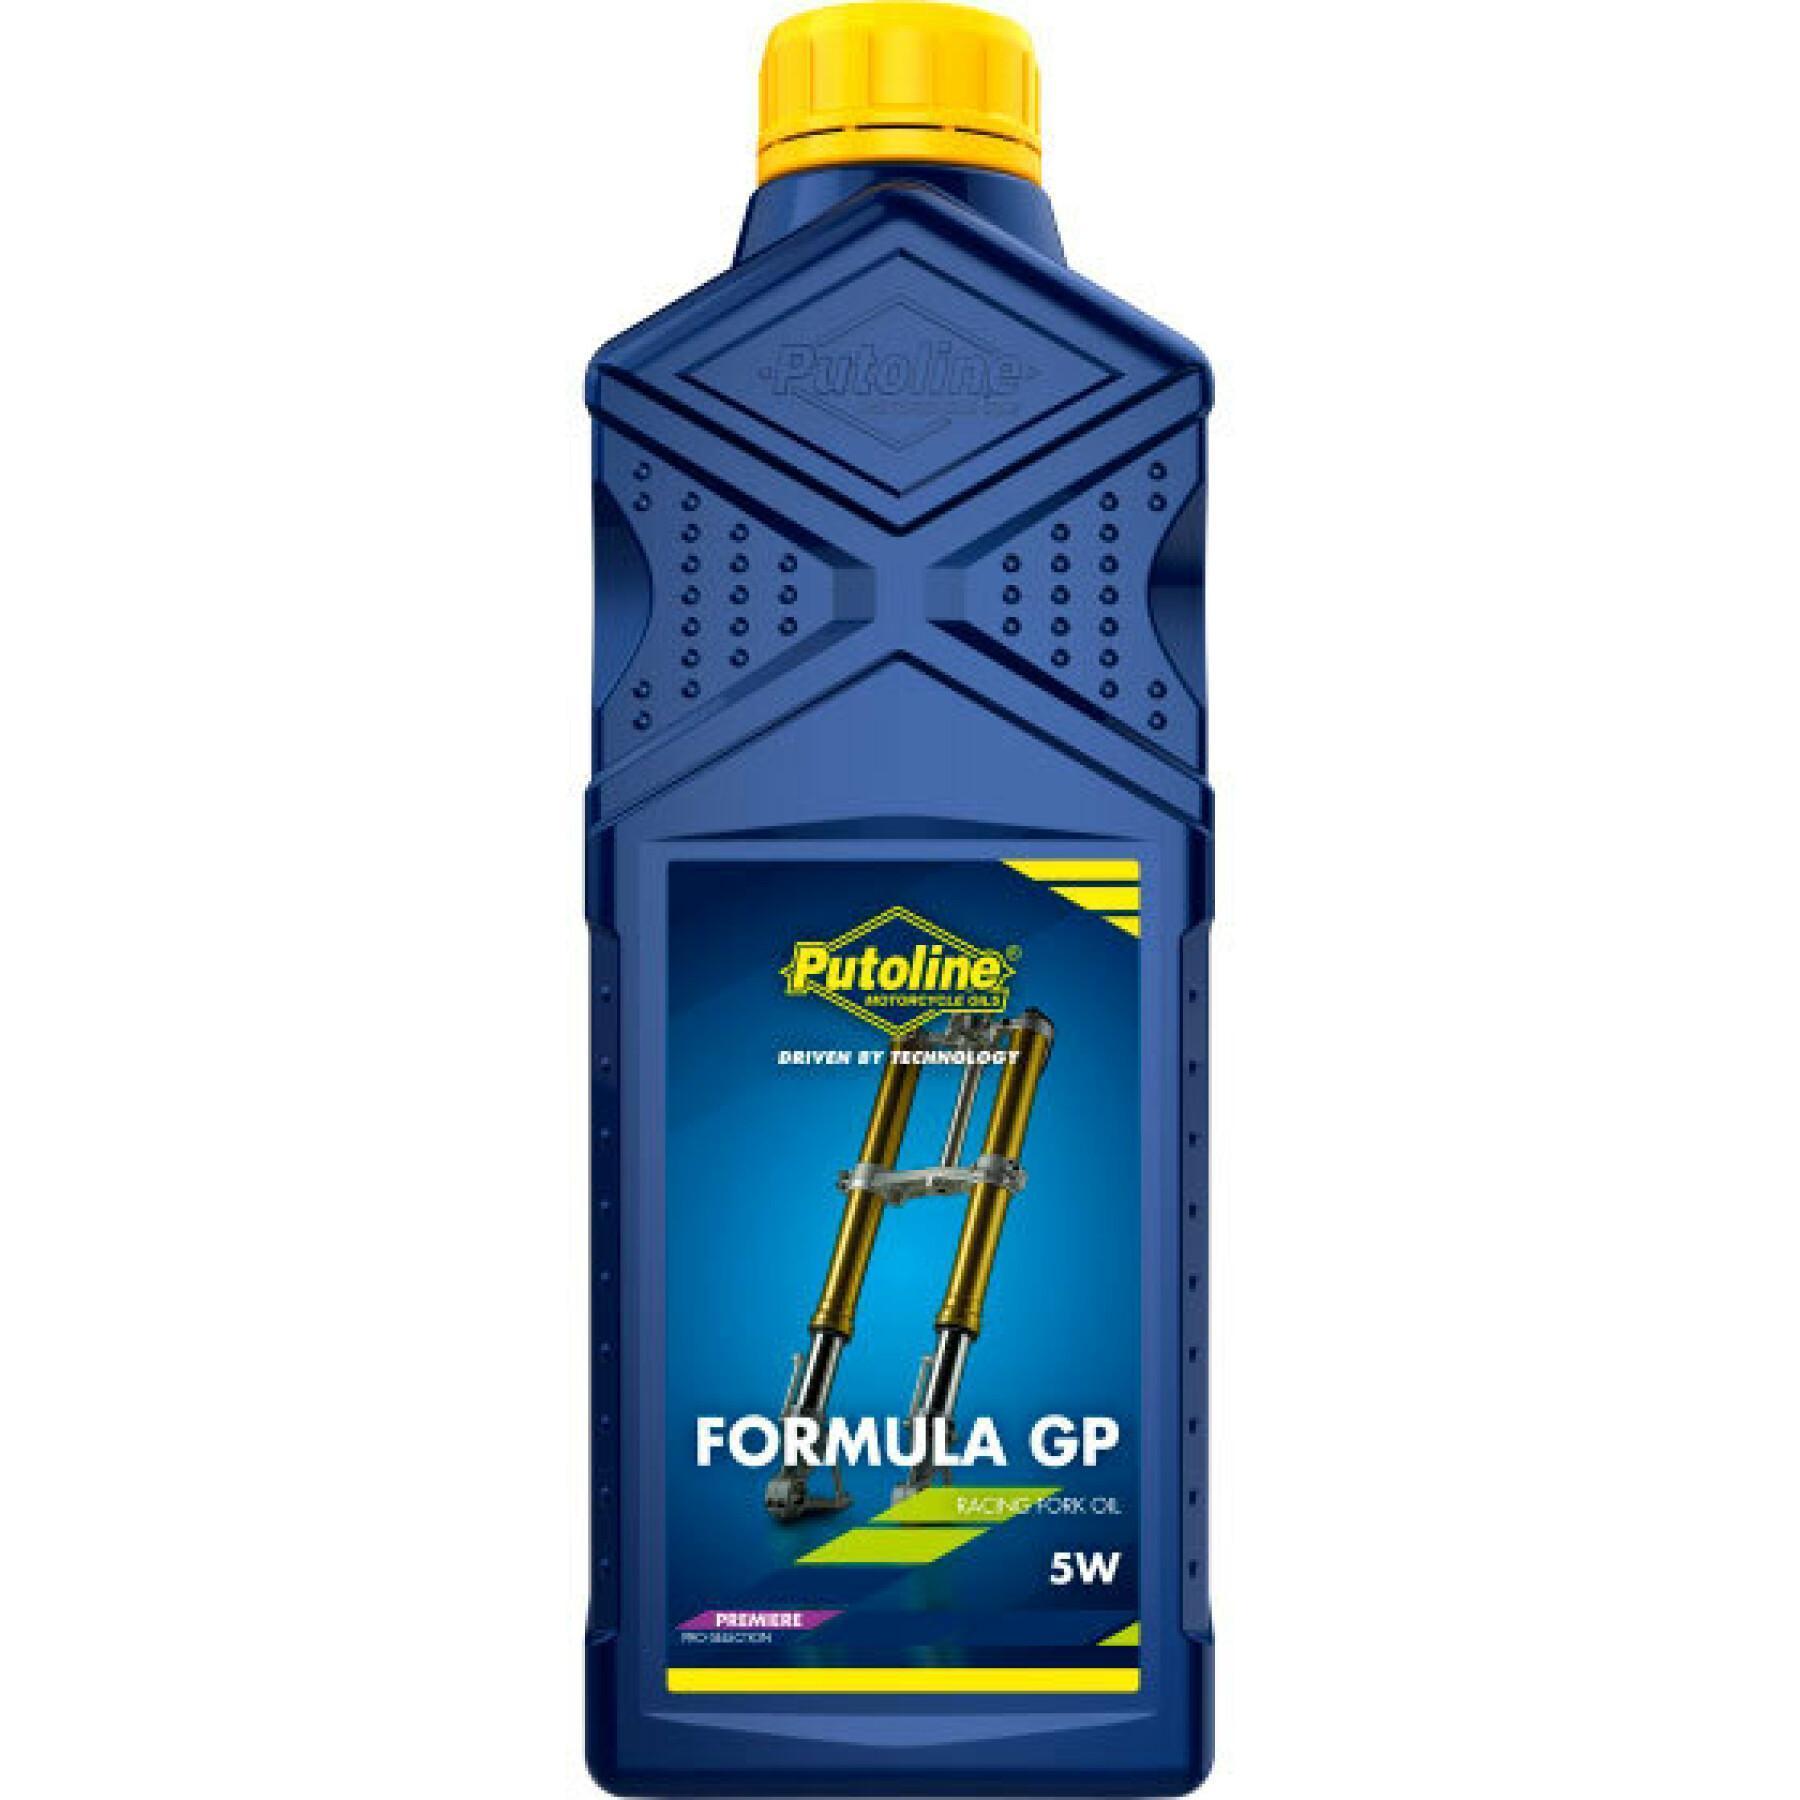 Motorcycle oil Putoline Formula GP 5W